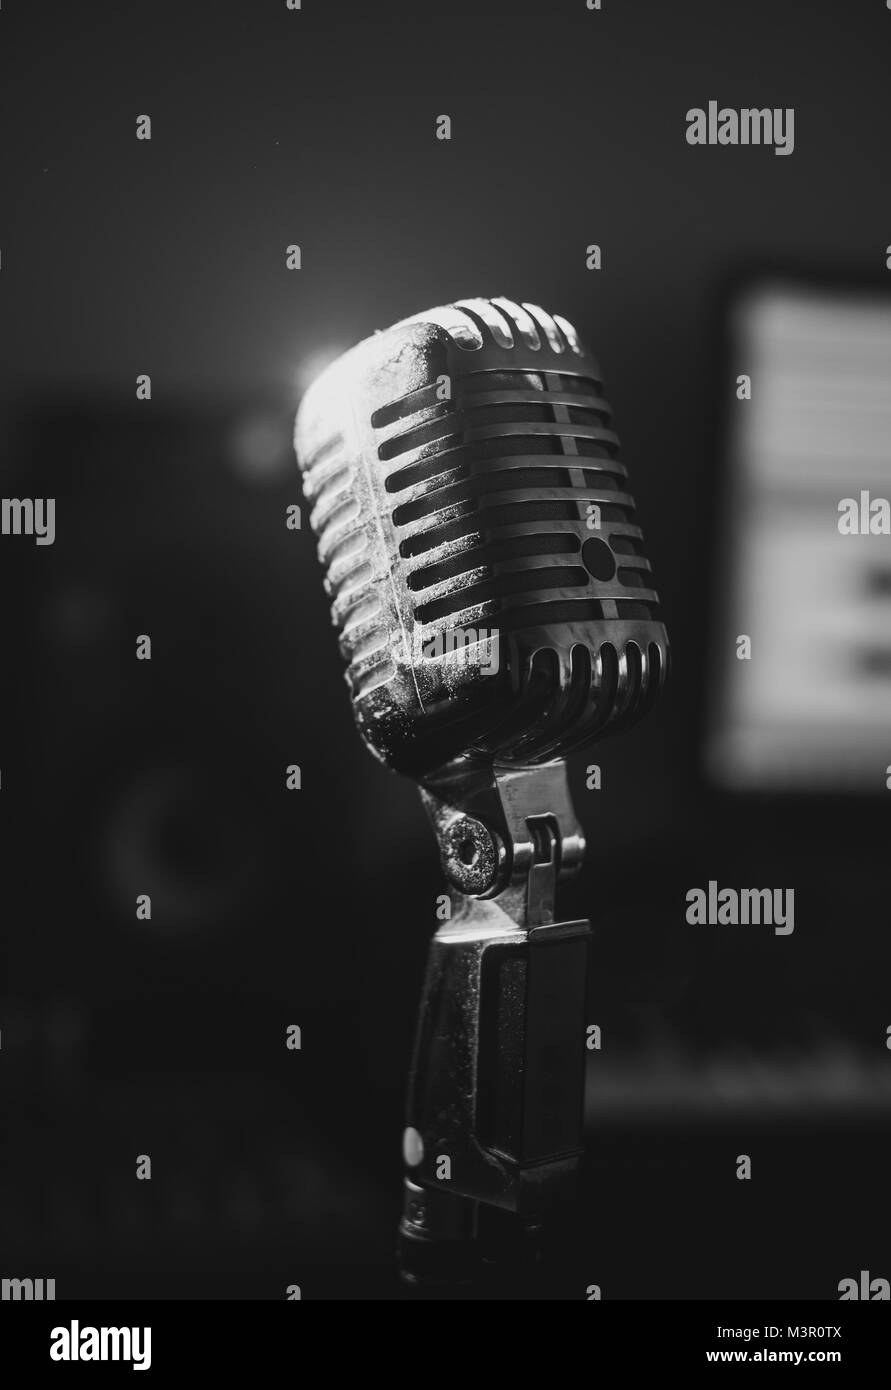 Retro microphone in home music studio. Black and white. Stock Photo